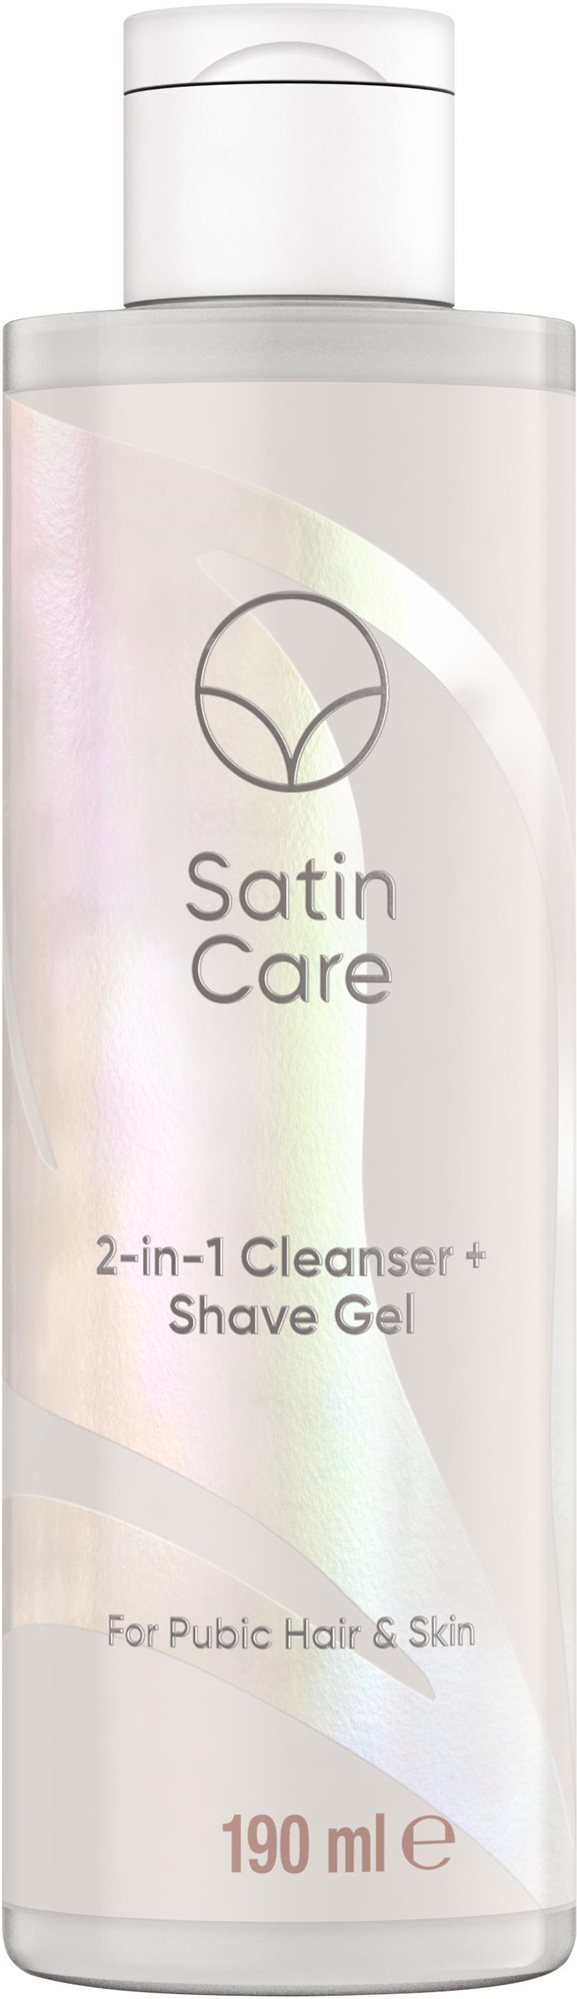 Borotvagél GILLETTE Venus Satin Care 2in1 Cleanser + Shave Gel 190 ml